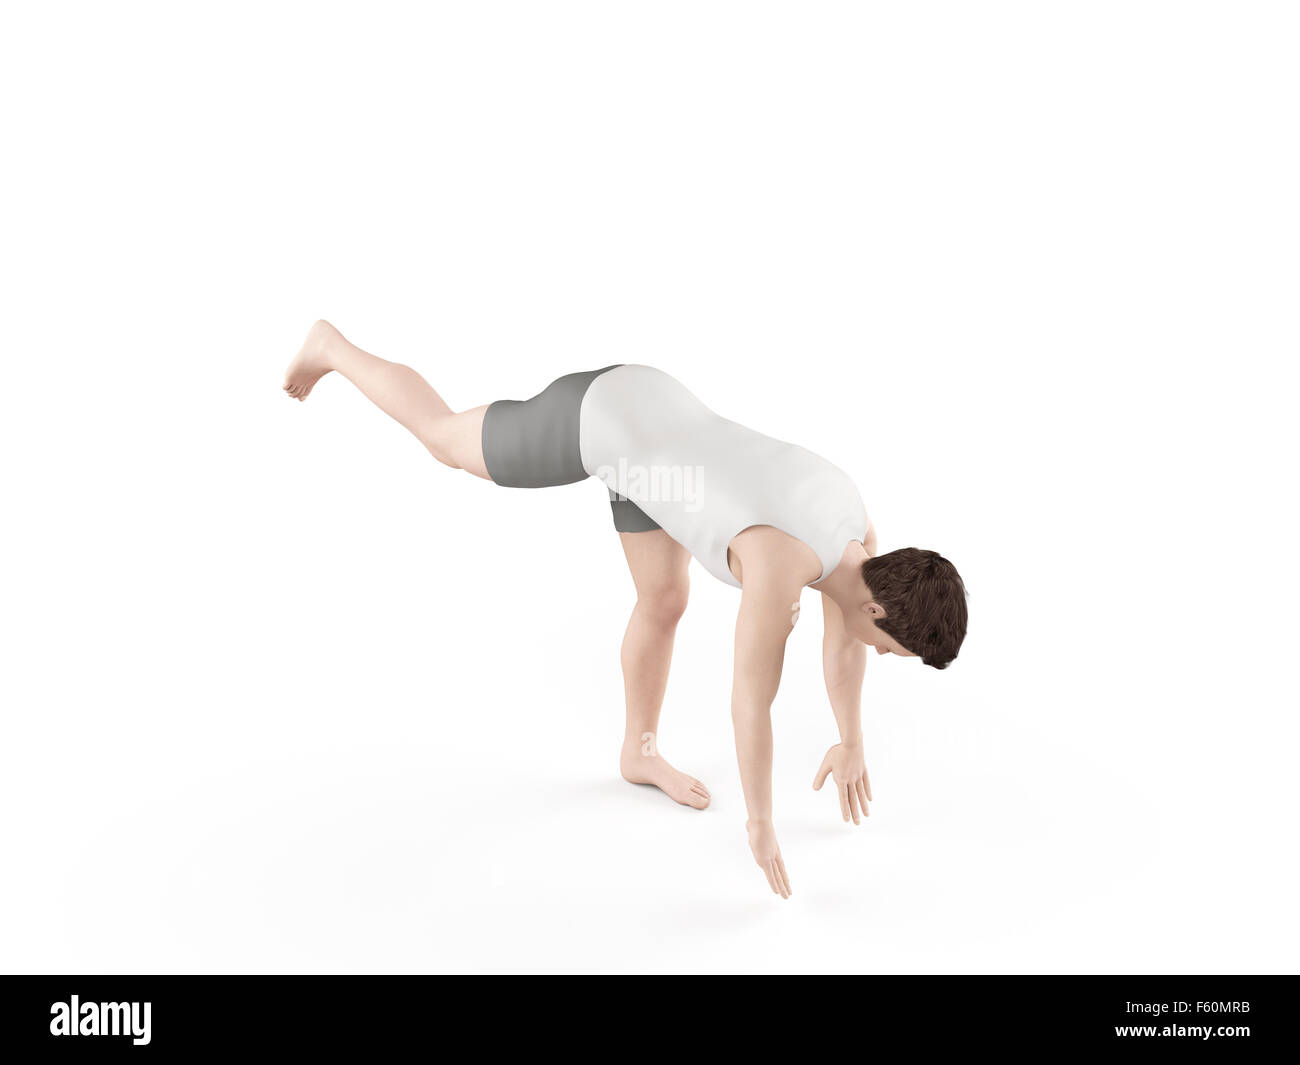 exercise illustration - one leg drop Stock Photo